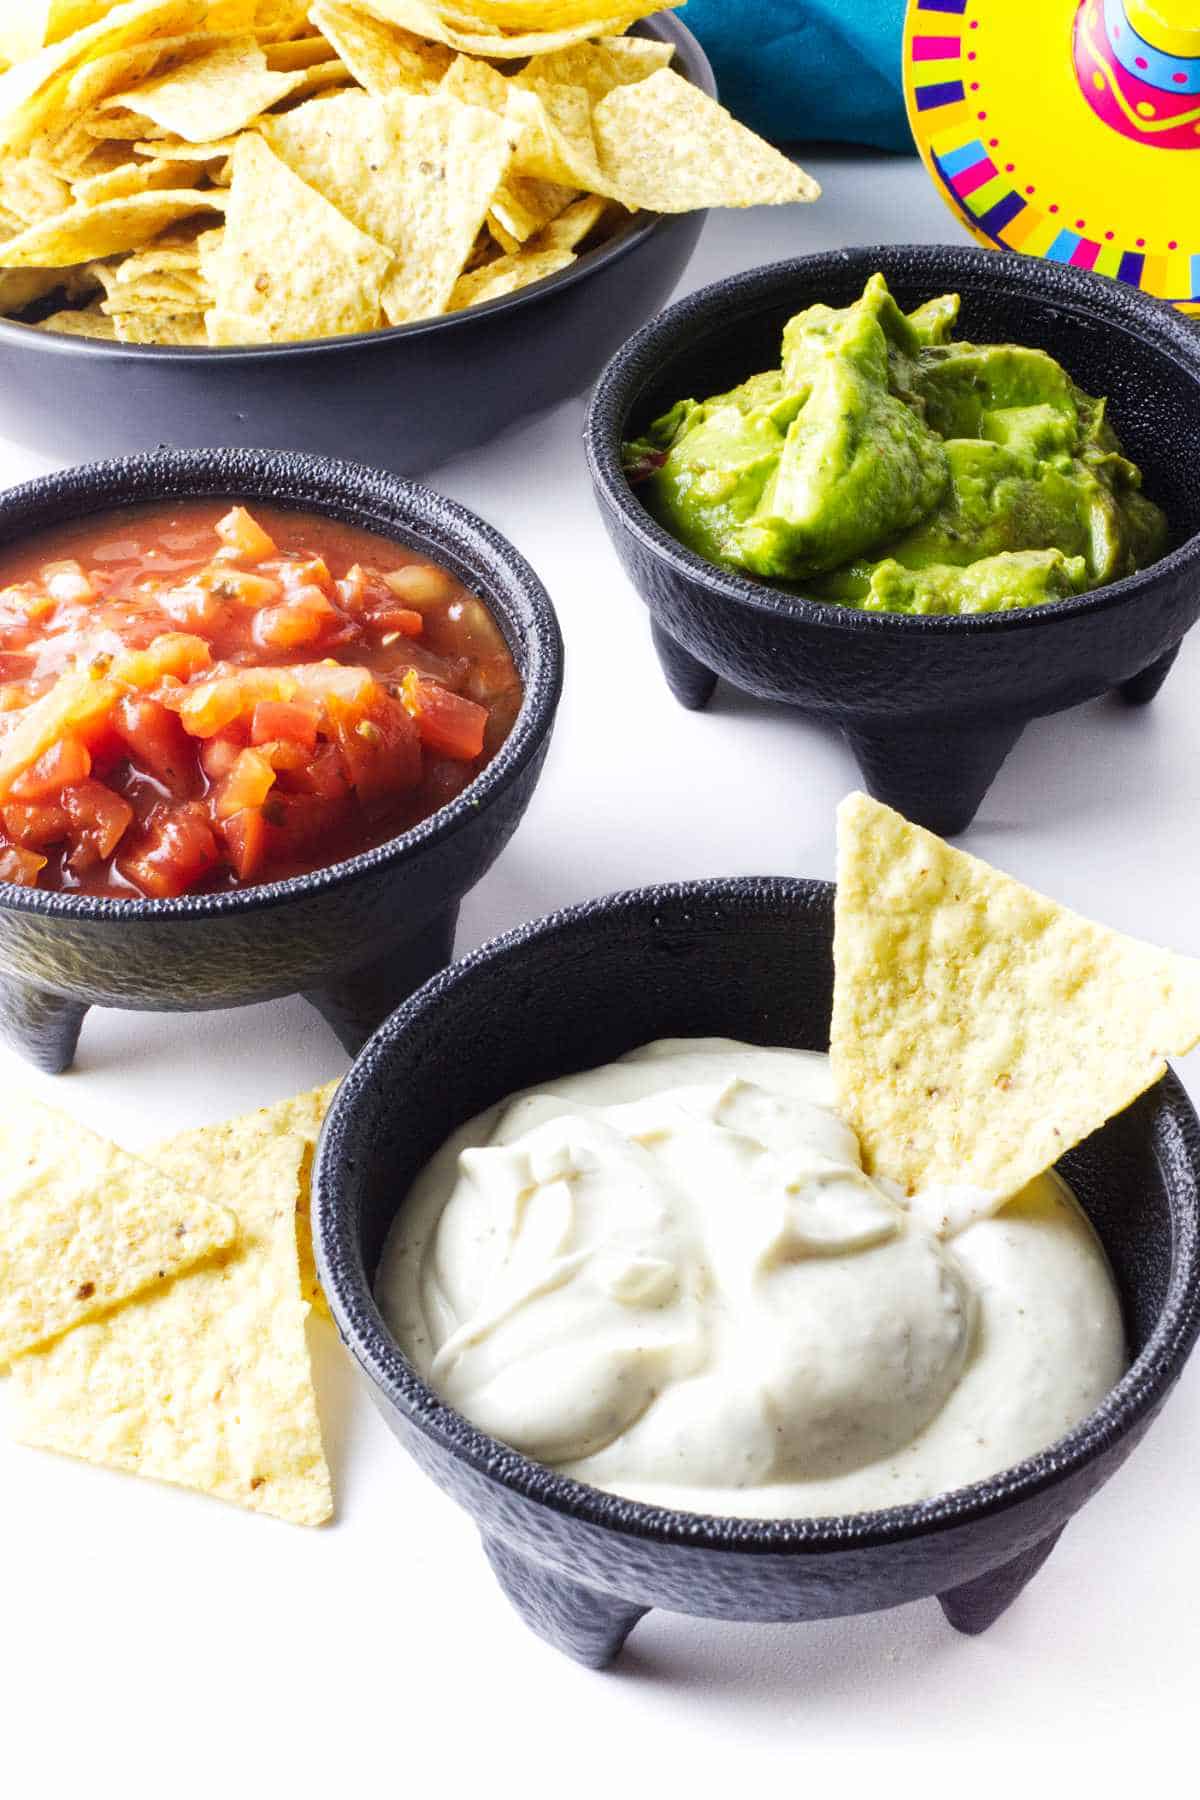 Mexican white sauce, pico de gallo, guacamole, and chips in separate bowls.